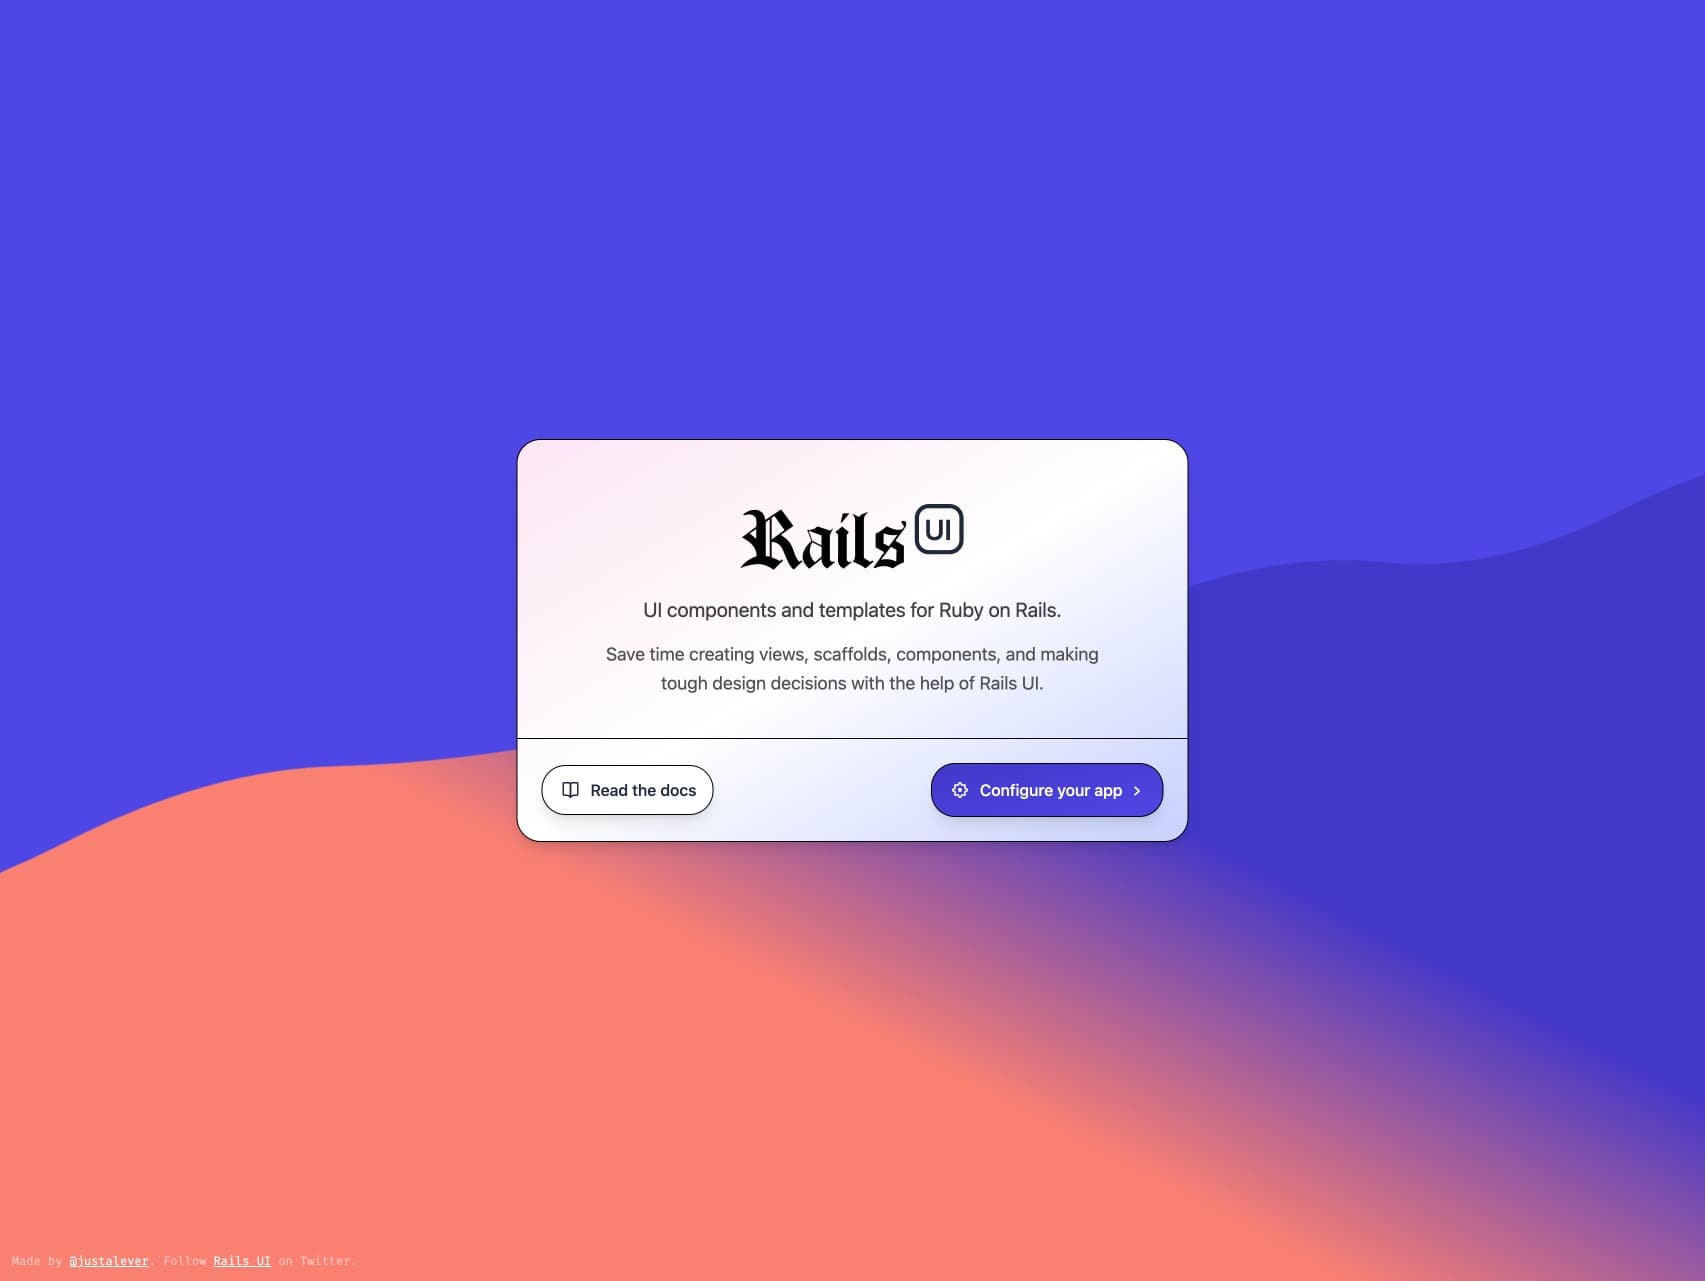 Landing page after installing Rails UI